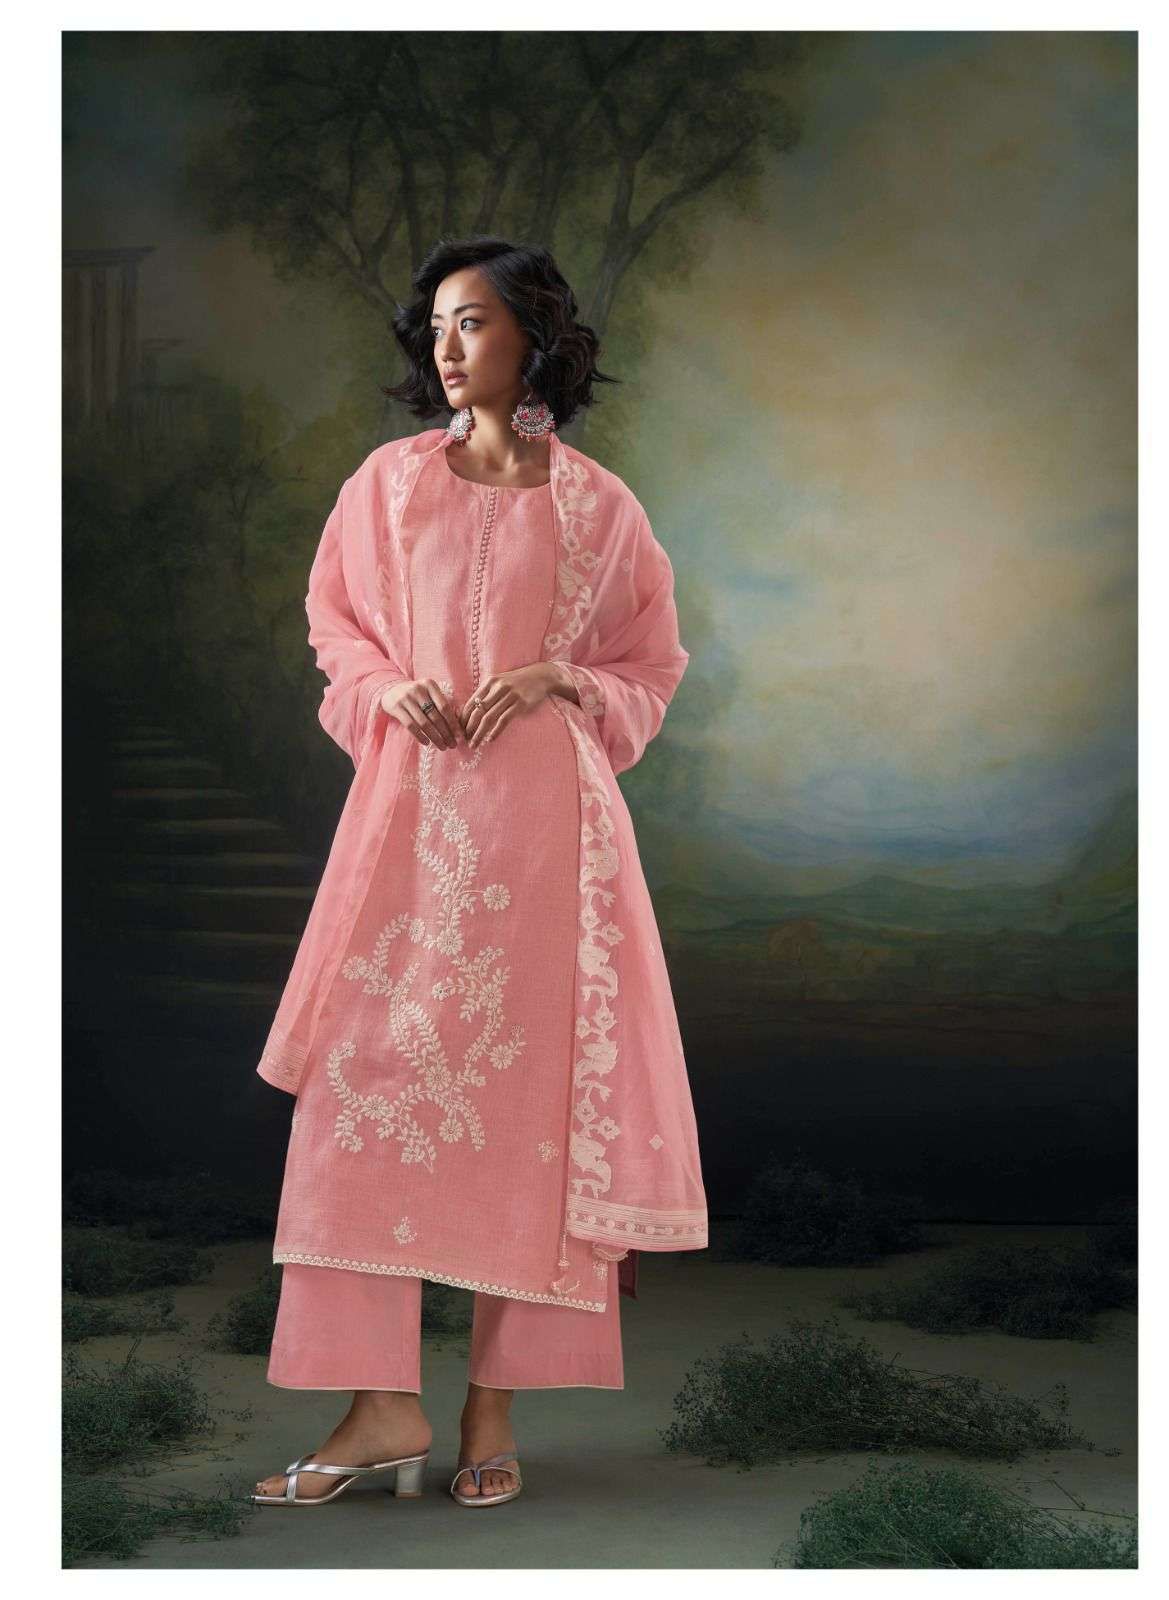 Parisa Ganga Linen Plazzo Style Suits Manufacturer